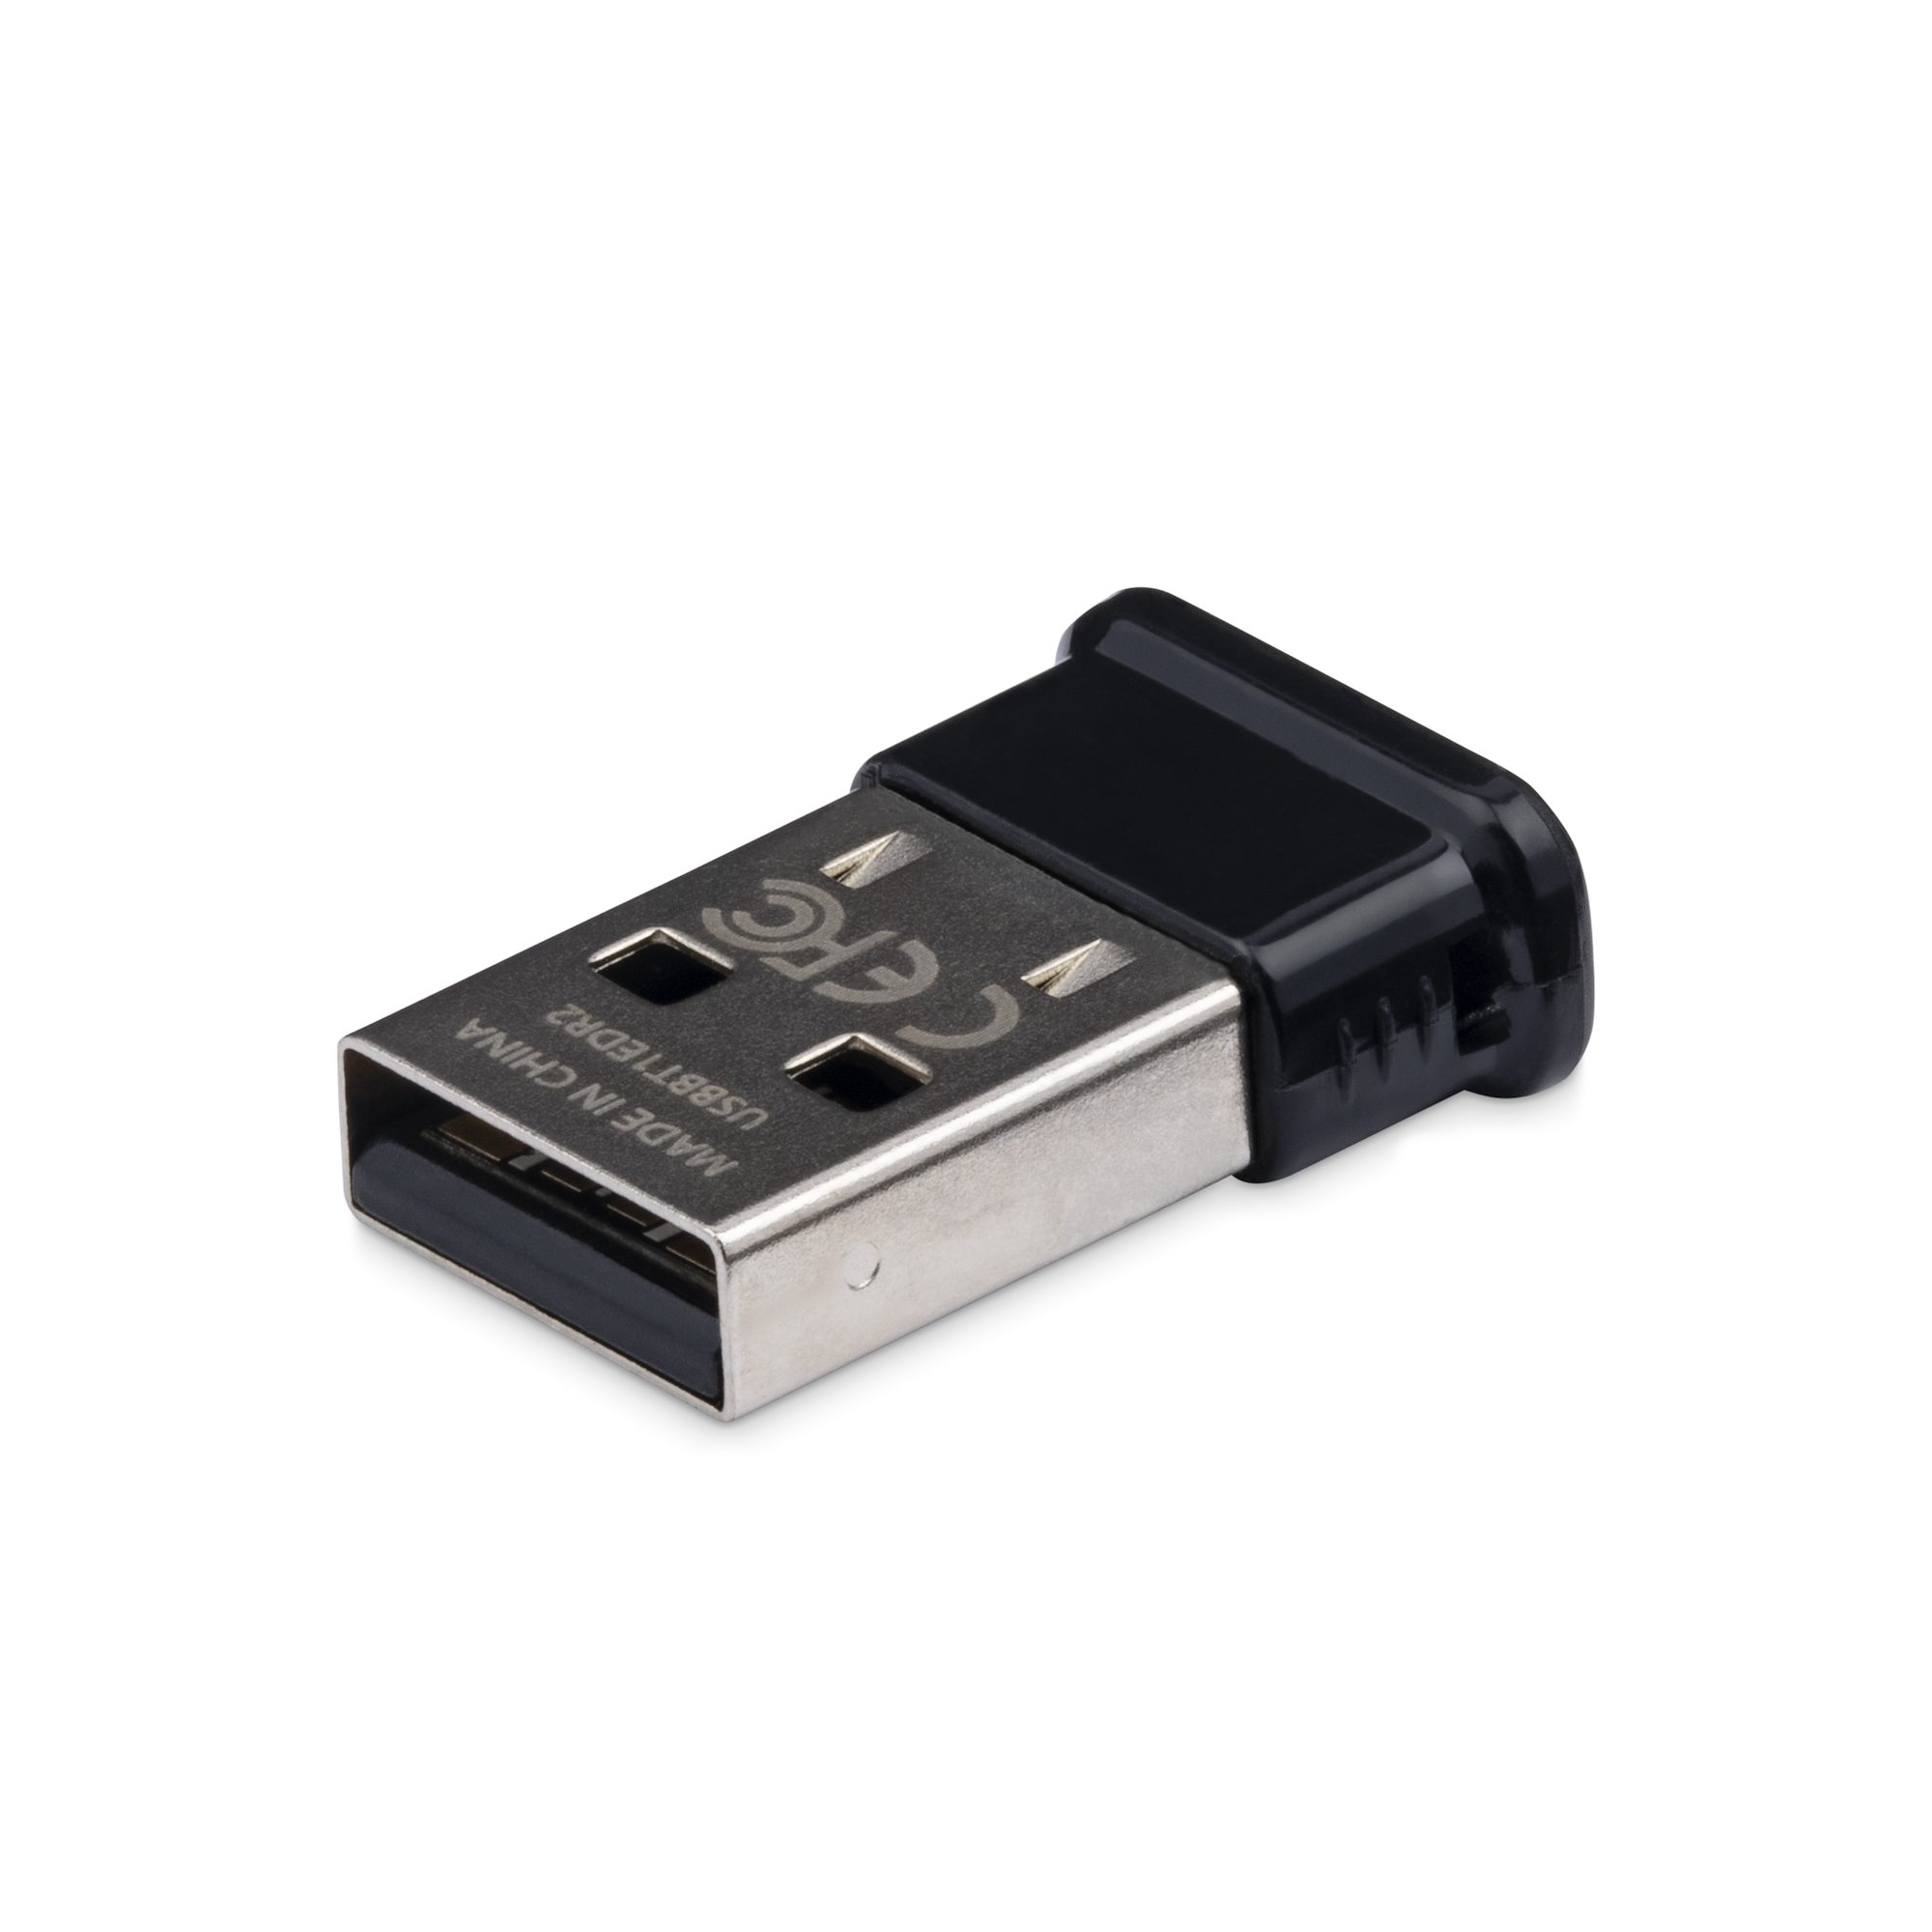 Mini USB 2.1 Adapter - Class 1 - Bluetooth Telecom Adapters | StarTech.com